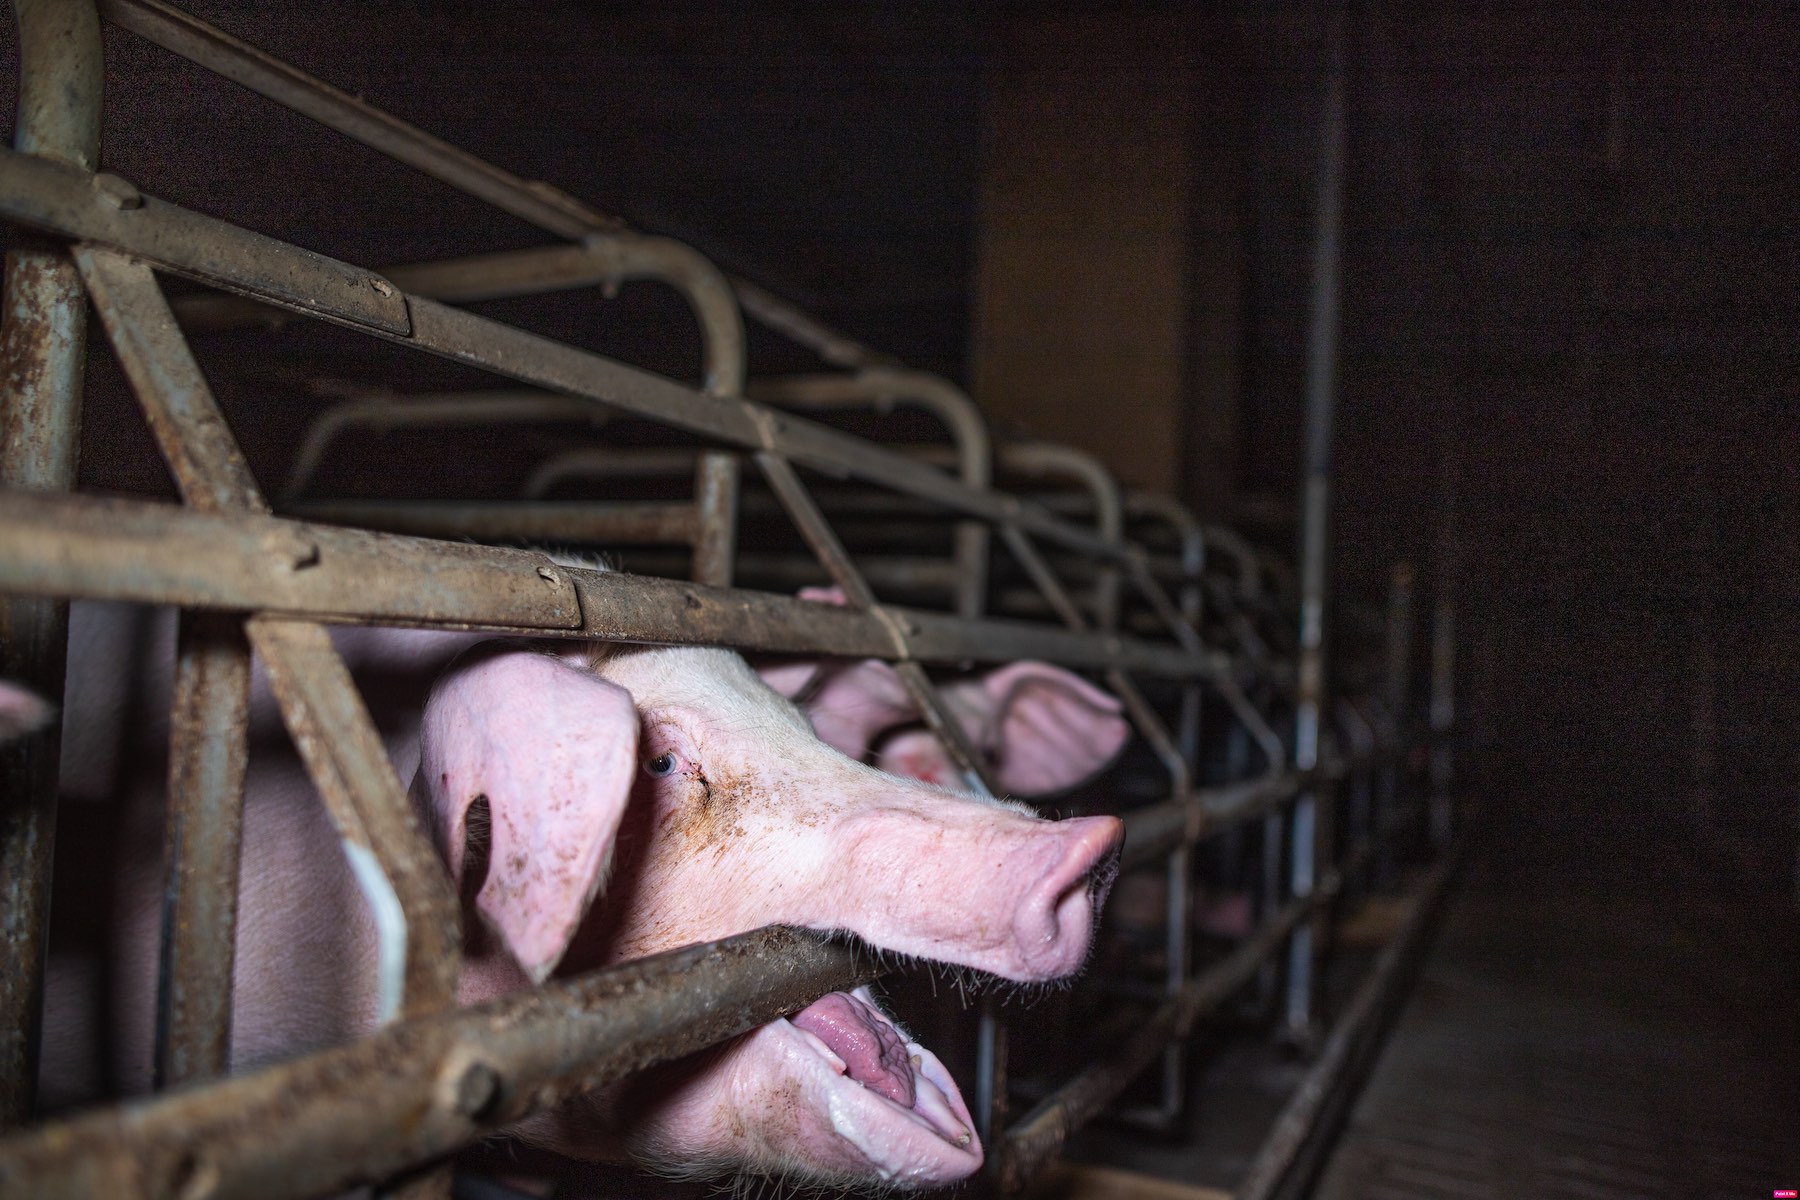 Factory farmed pigs